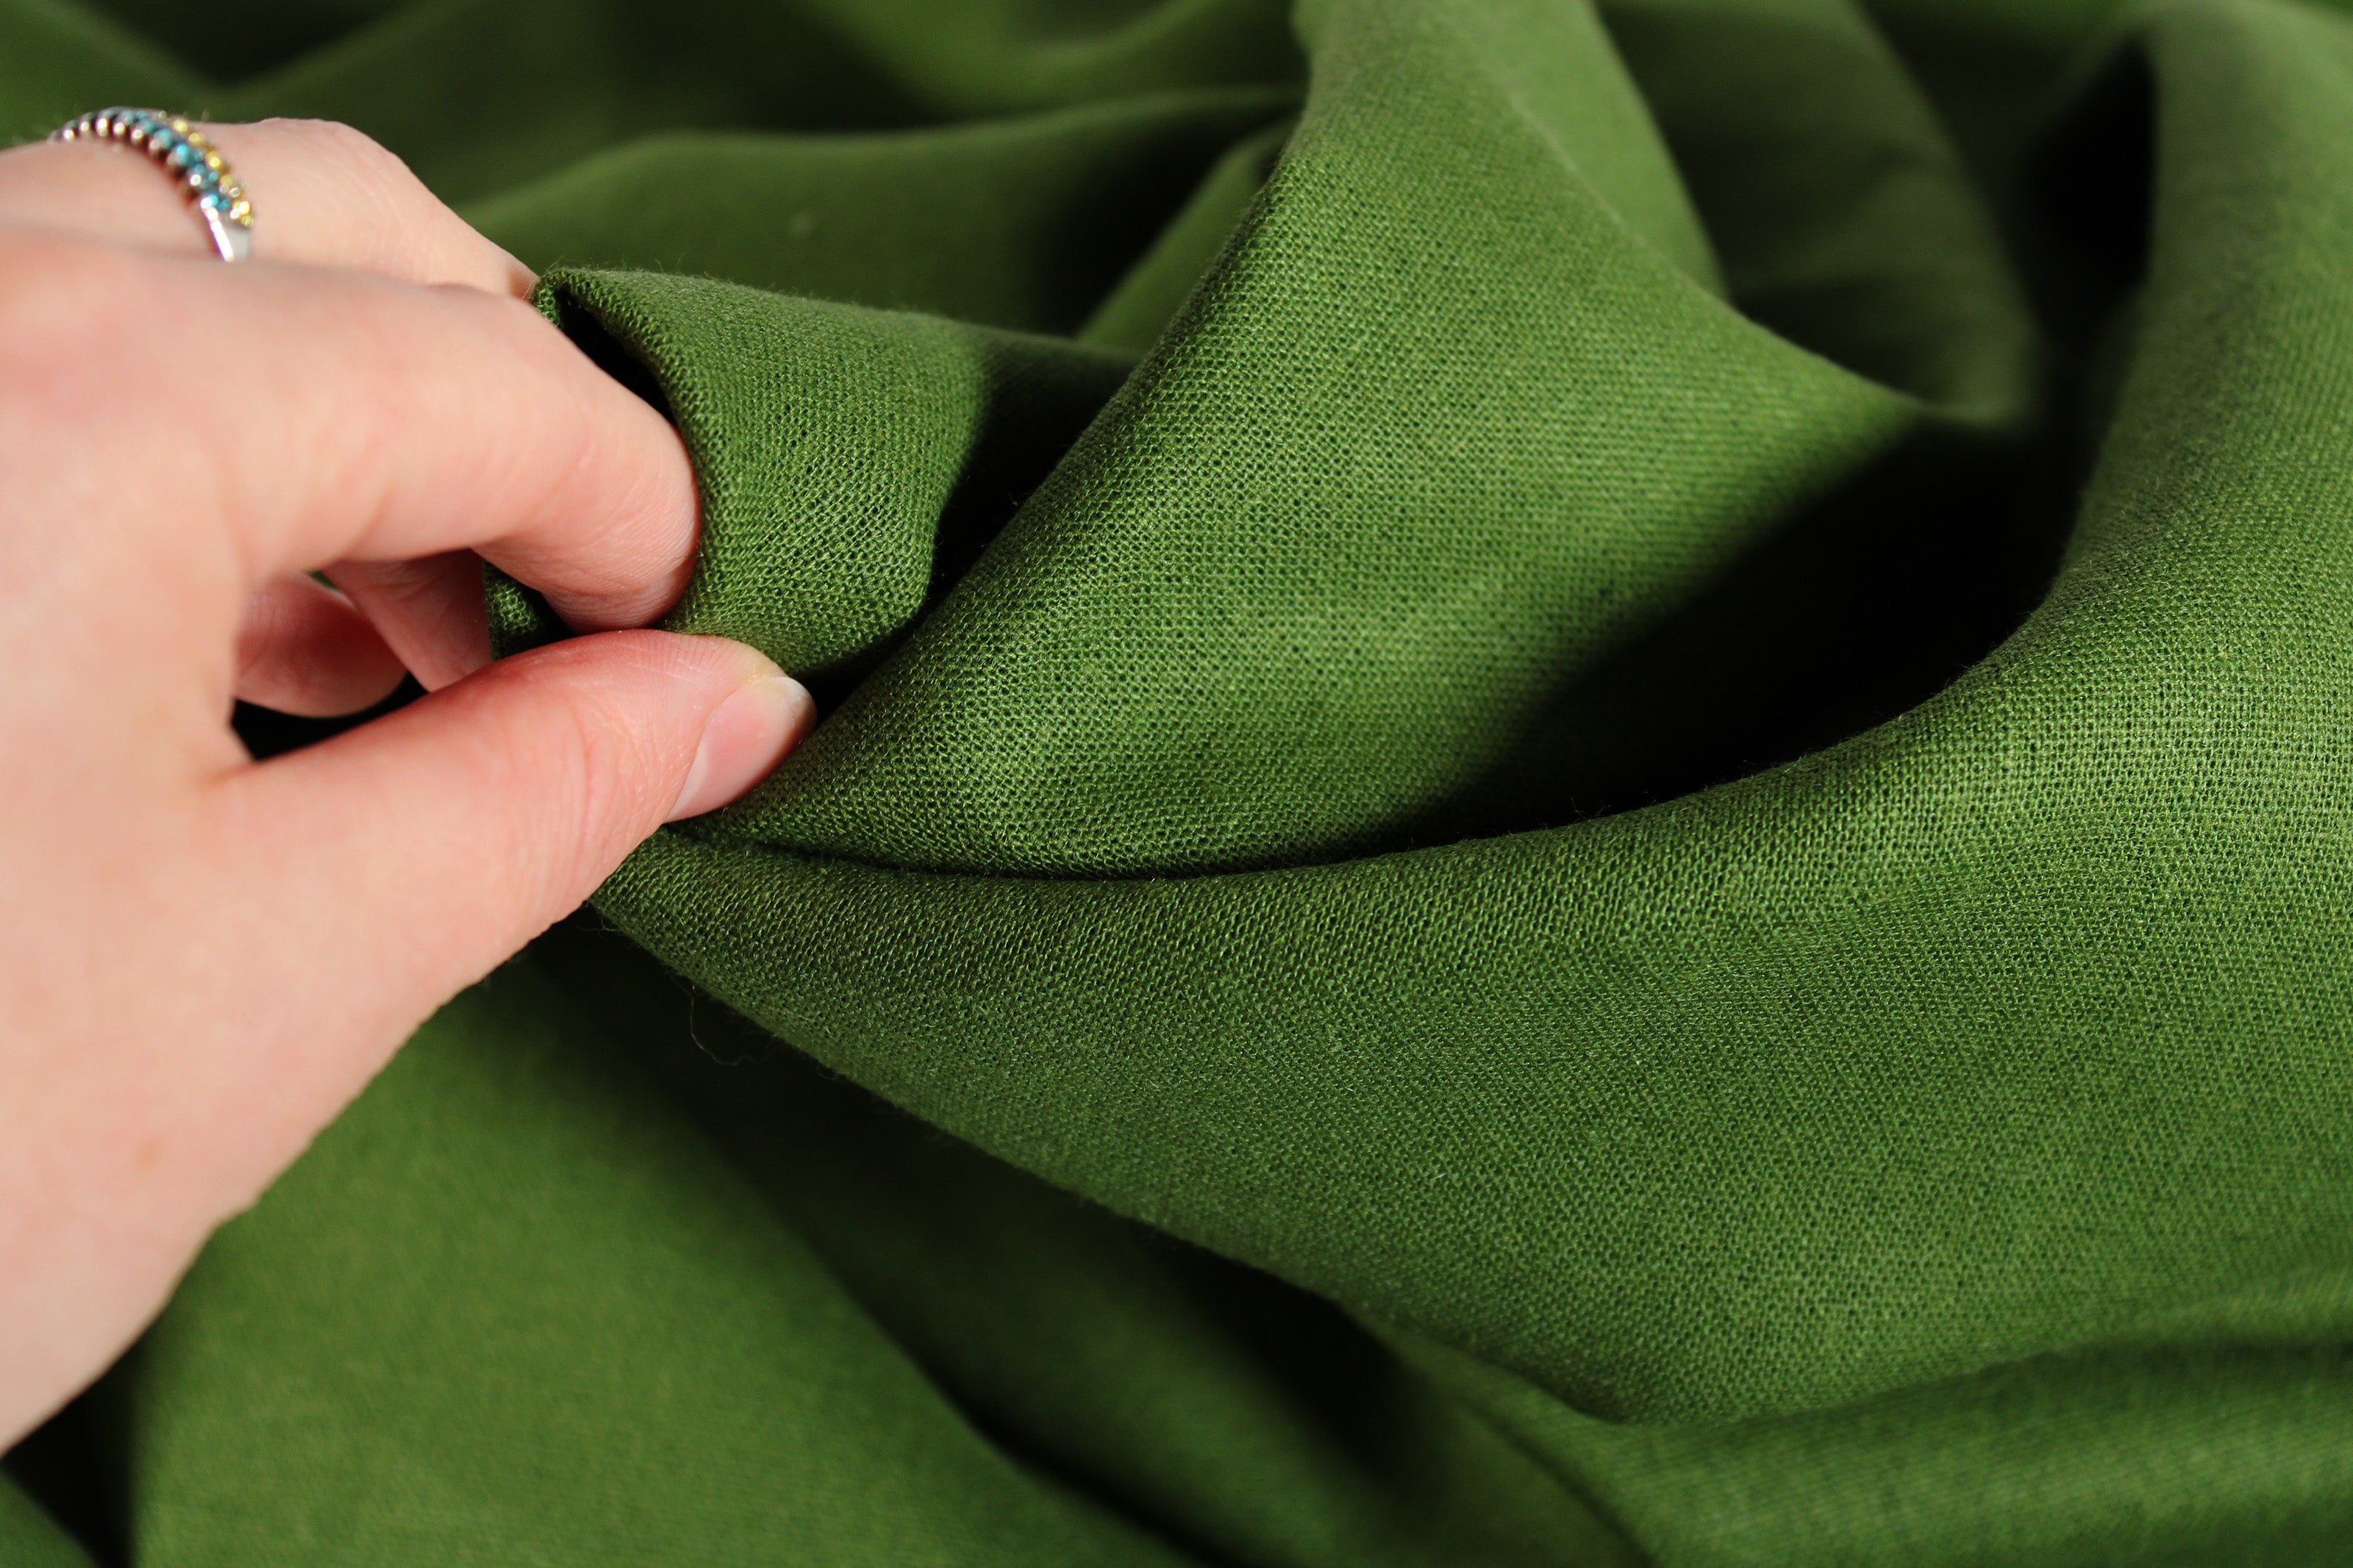 WHOLESALE Linen Fabric USA / Linen Fabric ROLL Wholesale / Linen by the Bolt / Garden green linen fabric